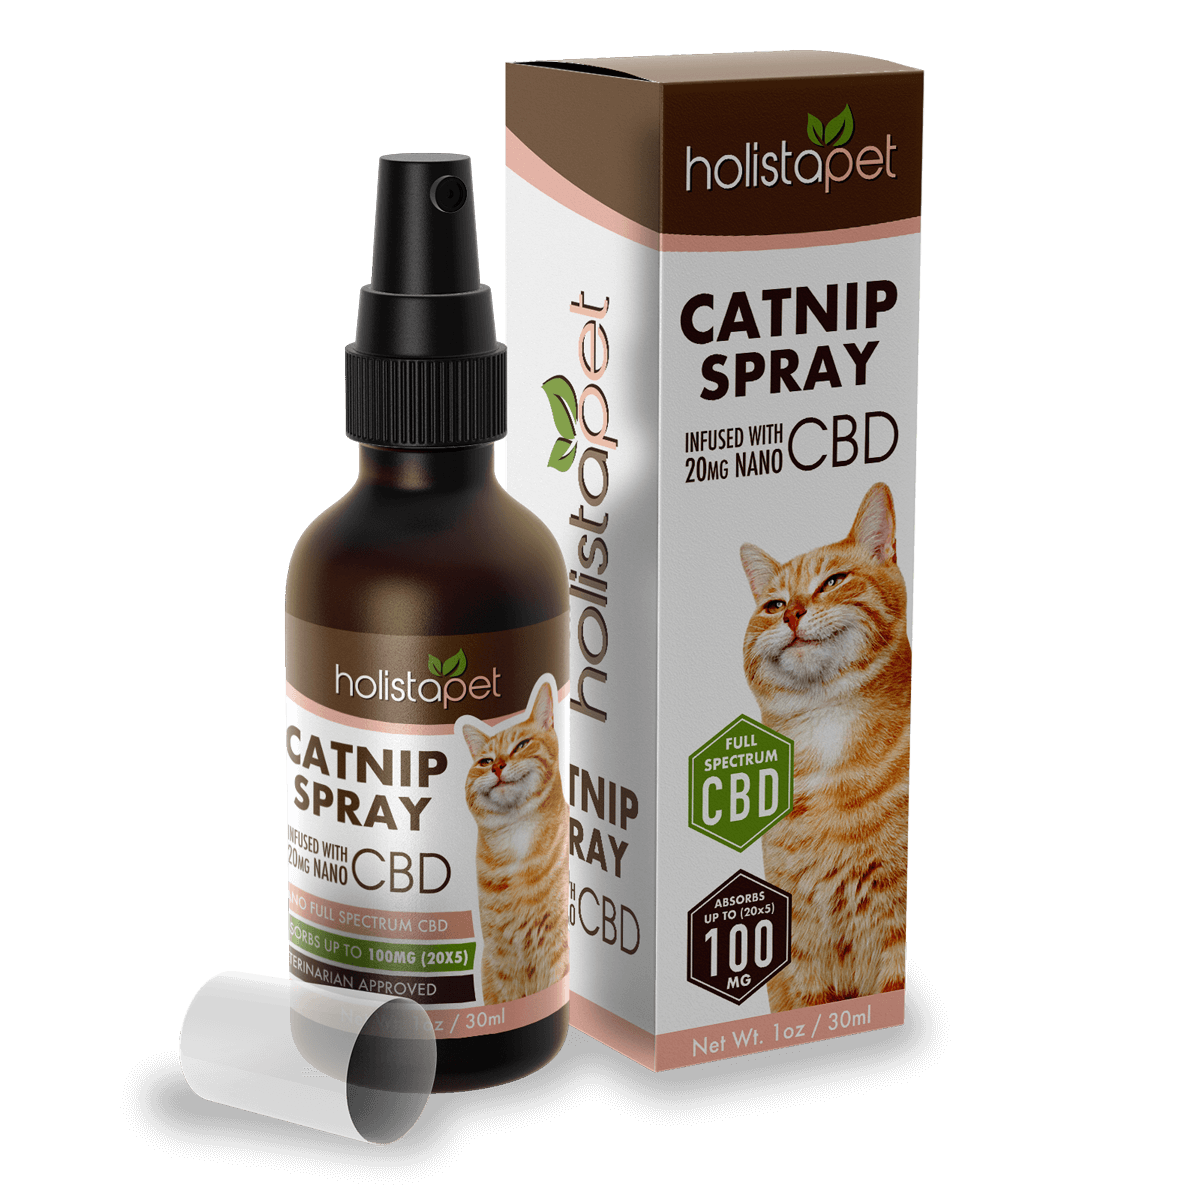 Holistapet Catnip Spray with CBD